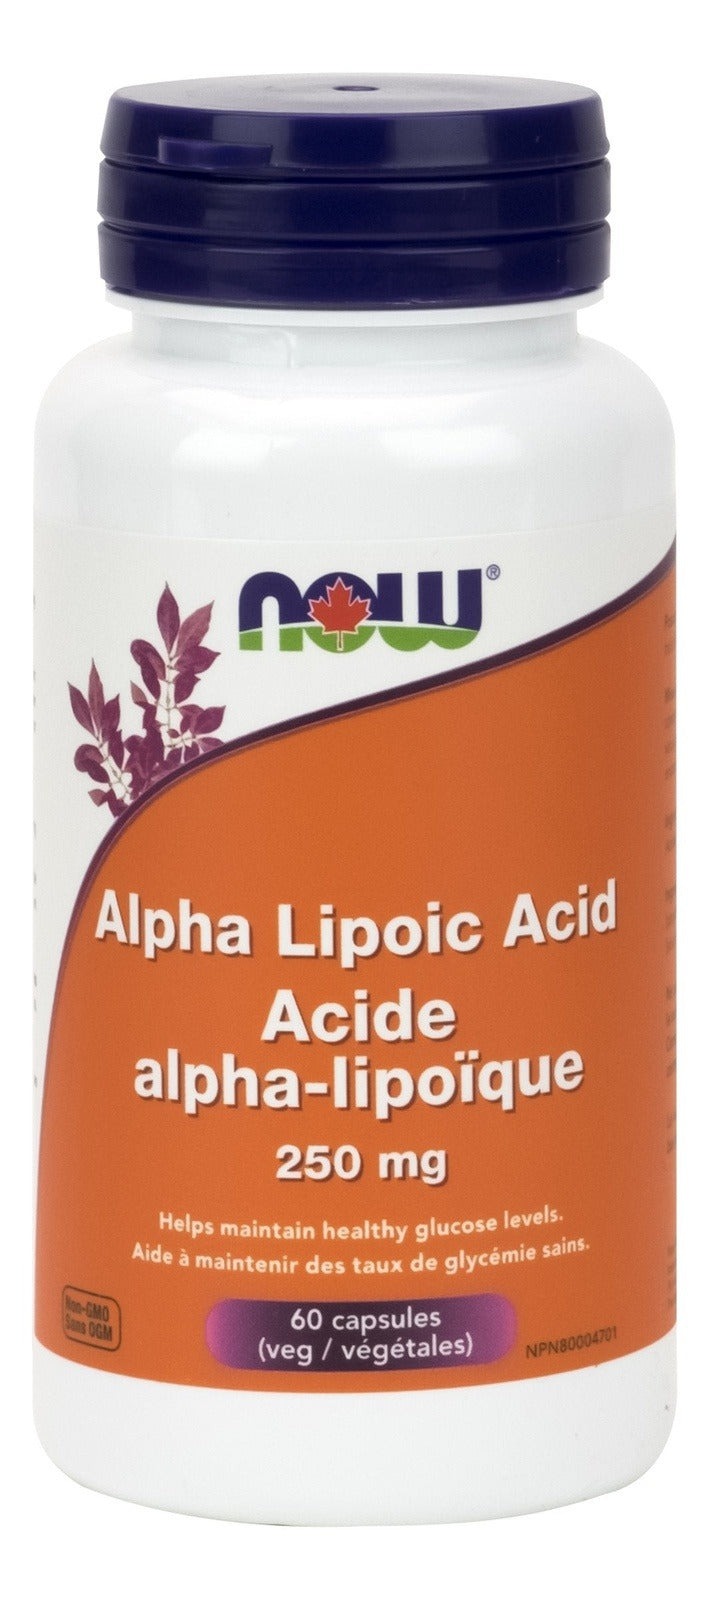 NOW Alpha Lipoic Acid 250 mg Capsules Image 2